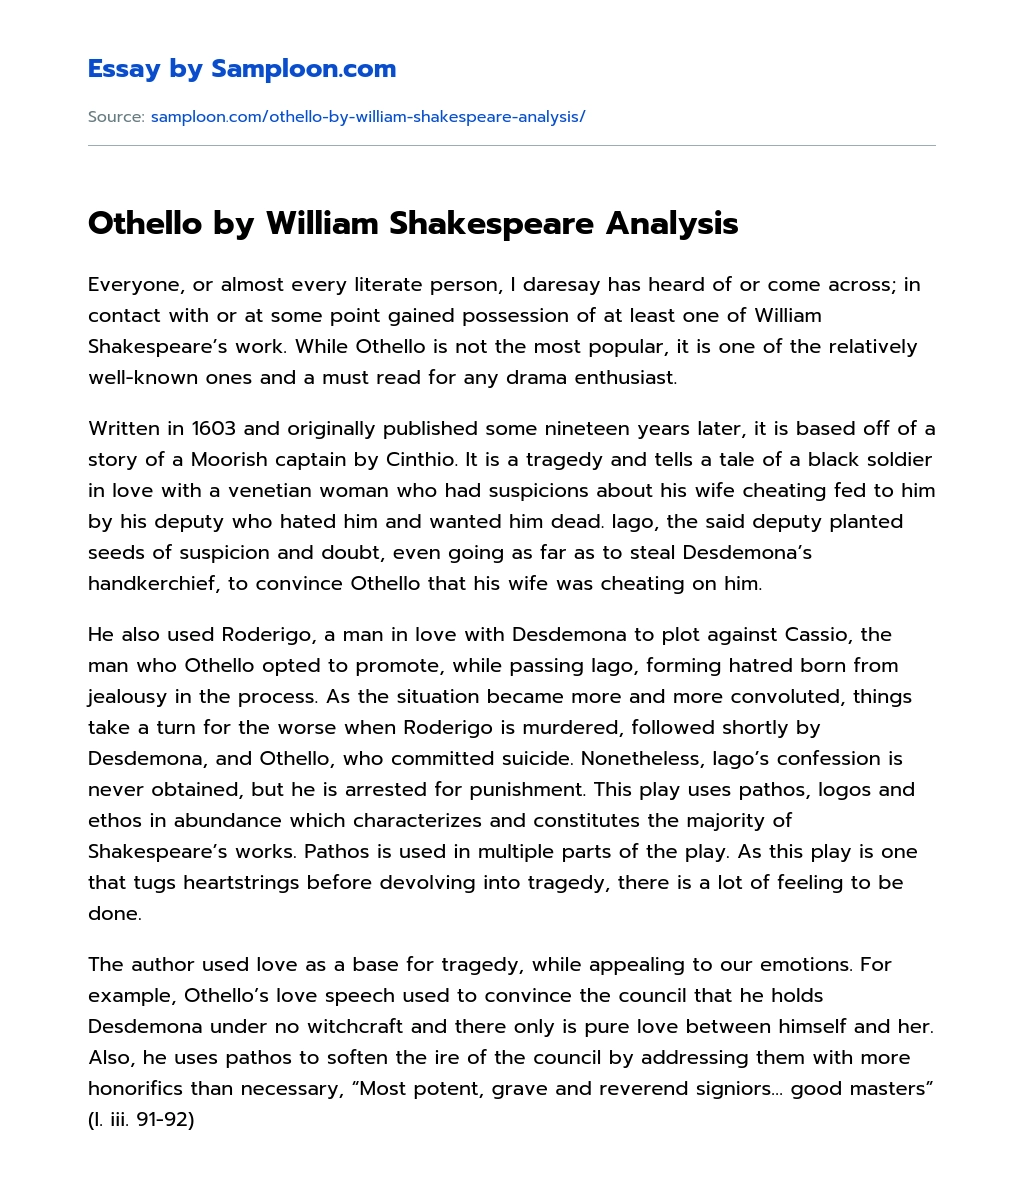 Othello by William Shakespeare Analysis essay